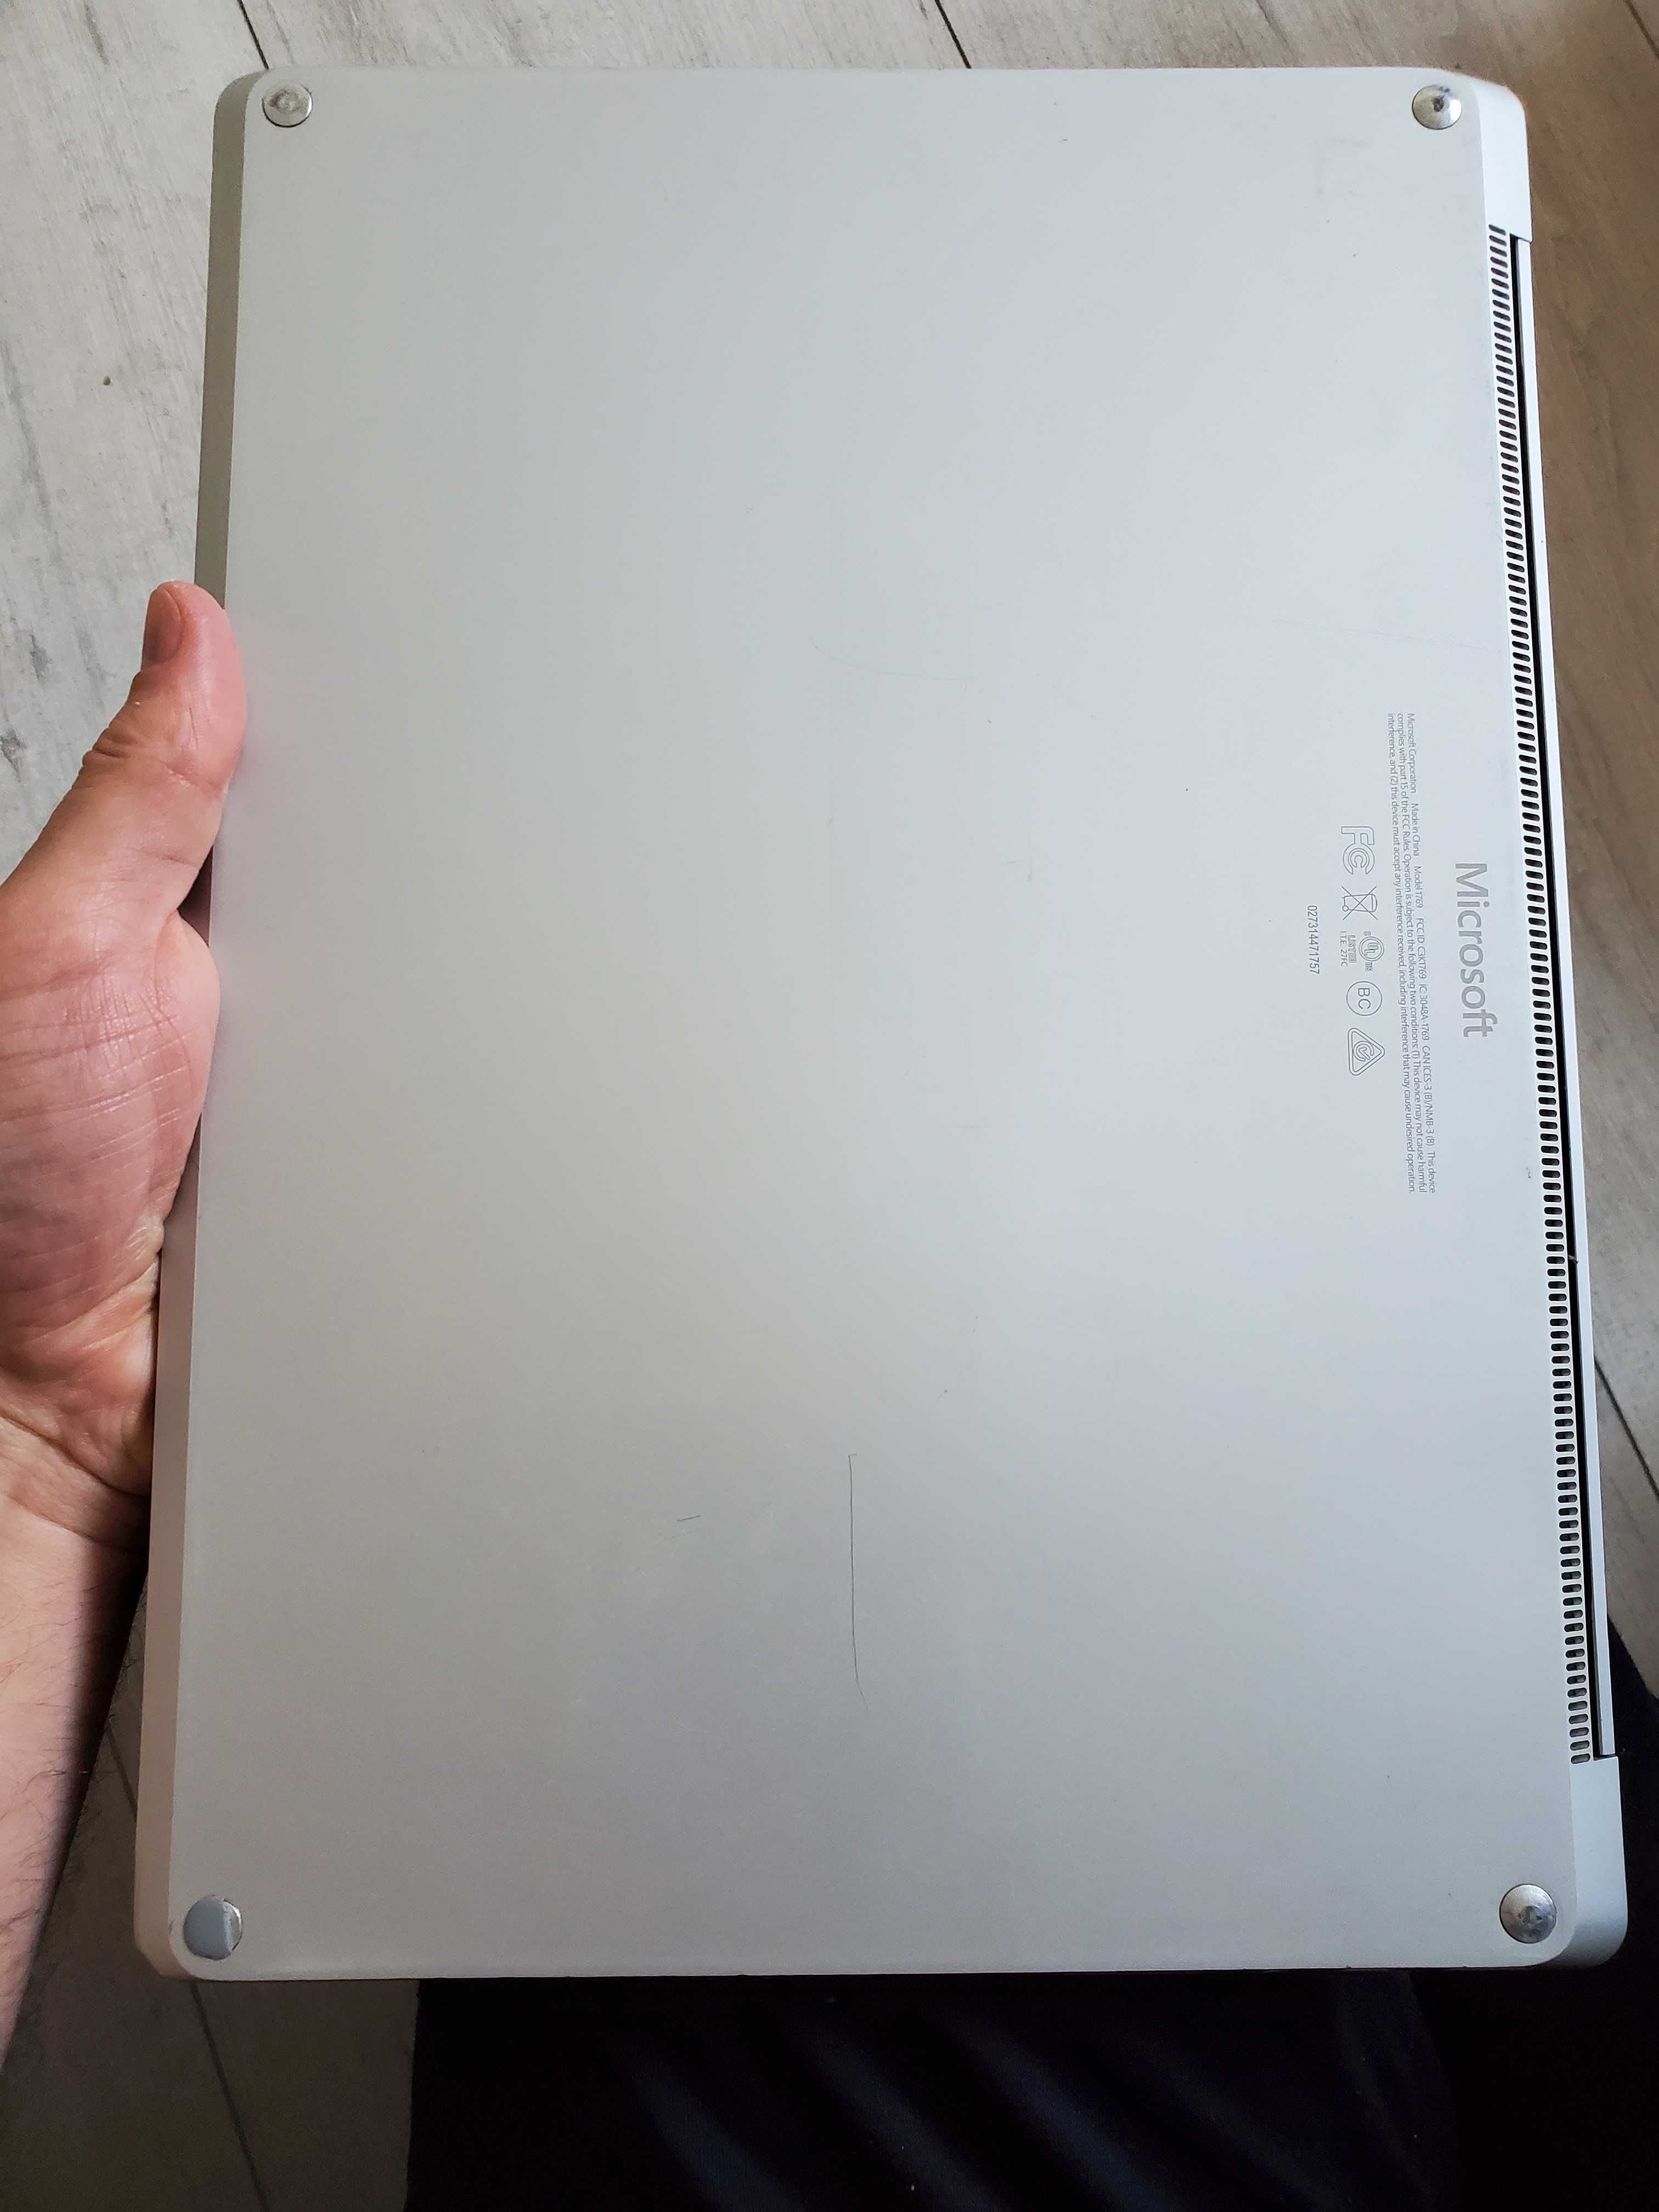 Microsoft Surface Laptop - 1769 13.5" QHD i5-7200U SSD 128Gb RAM 4Gb